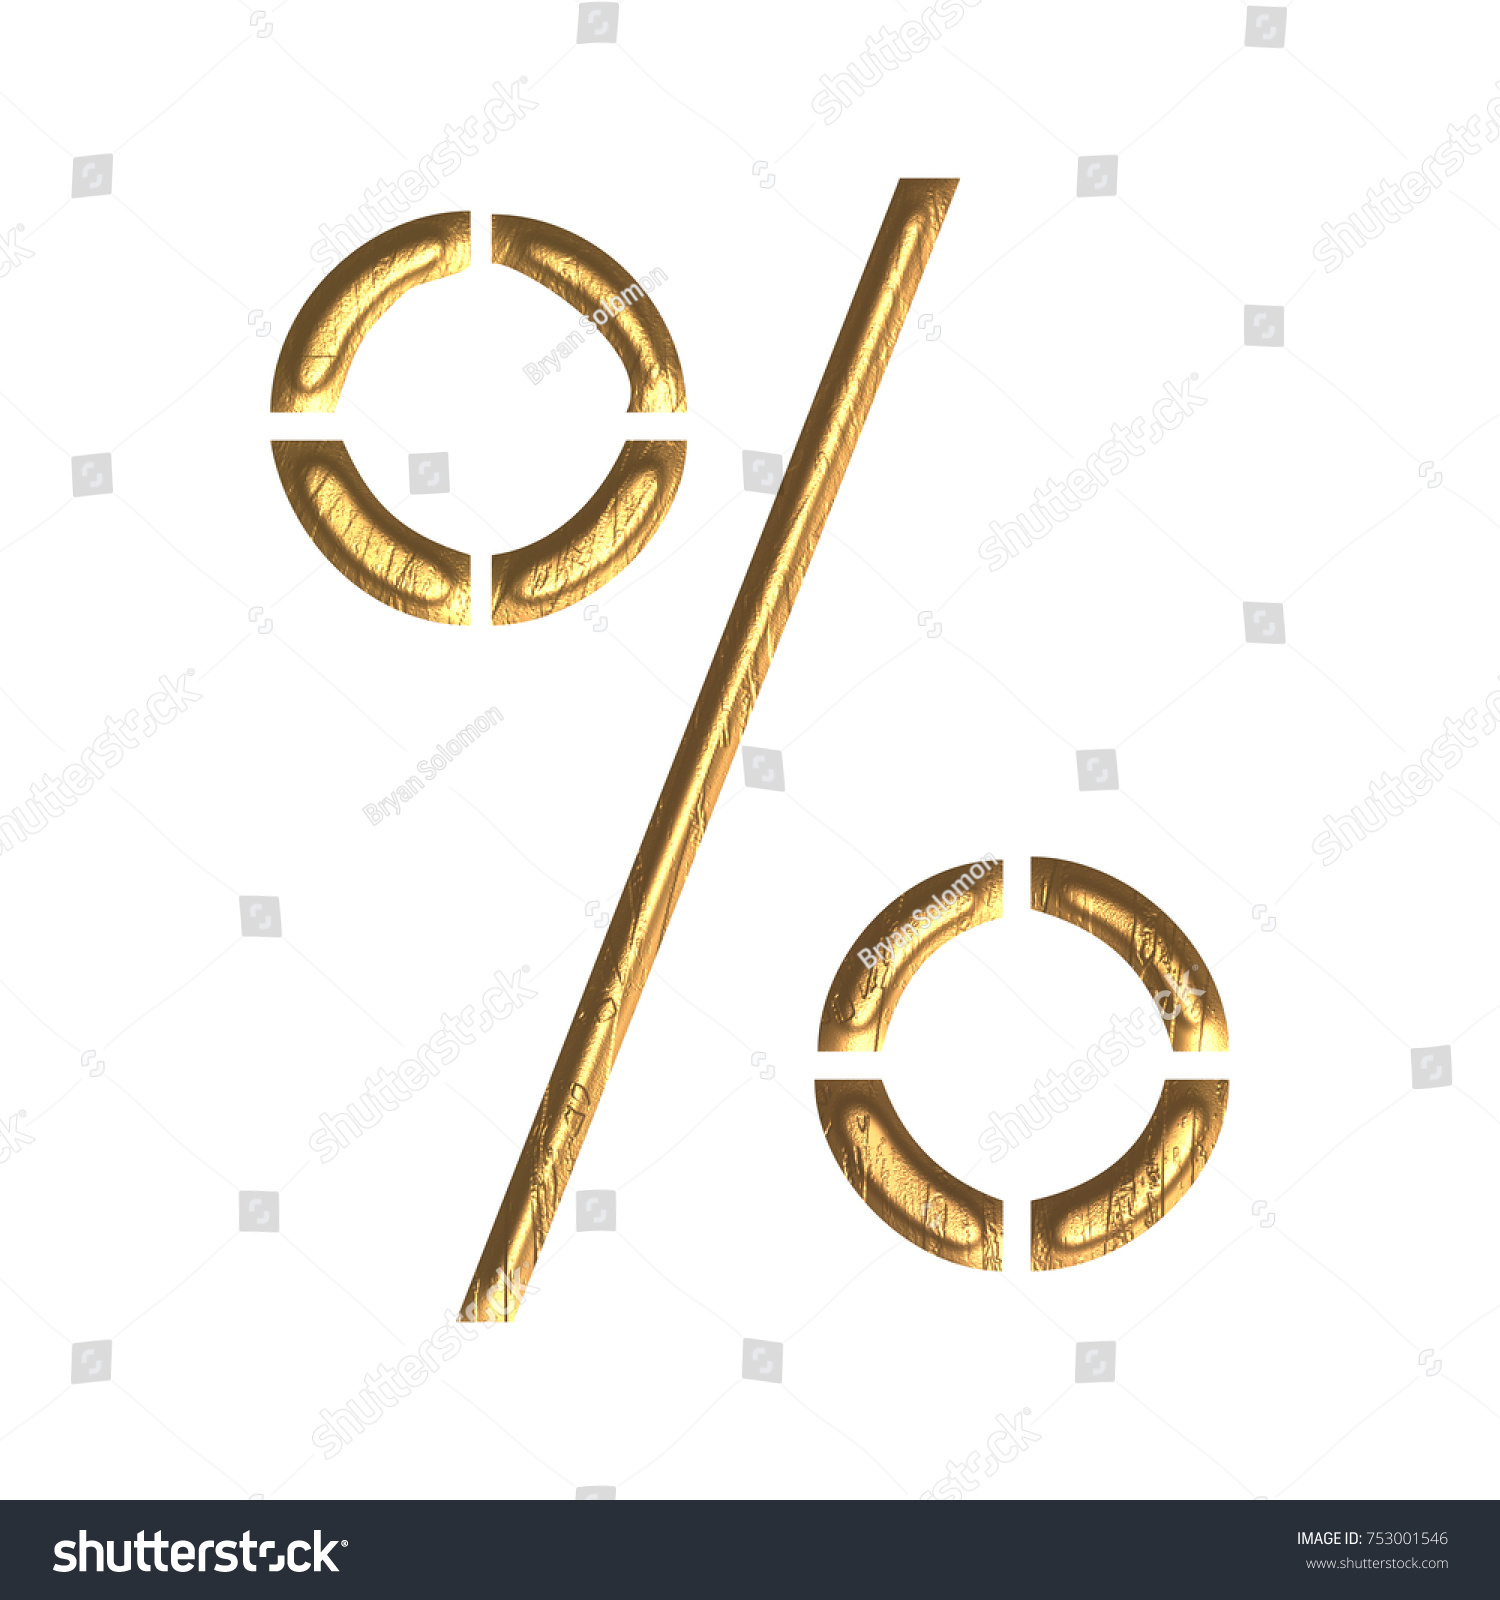 Weathered Golden Percent Sign Percentage Mark Stock Illustration ...